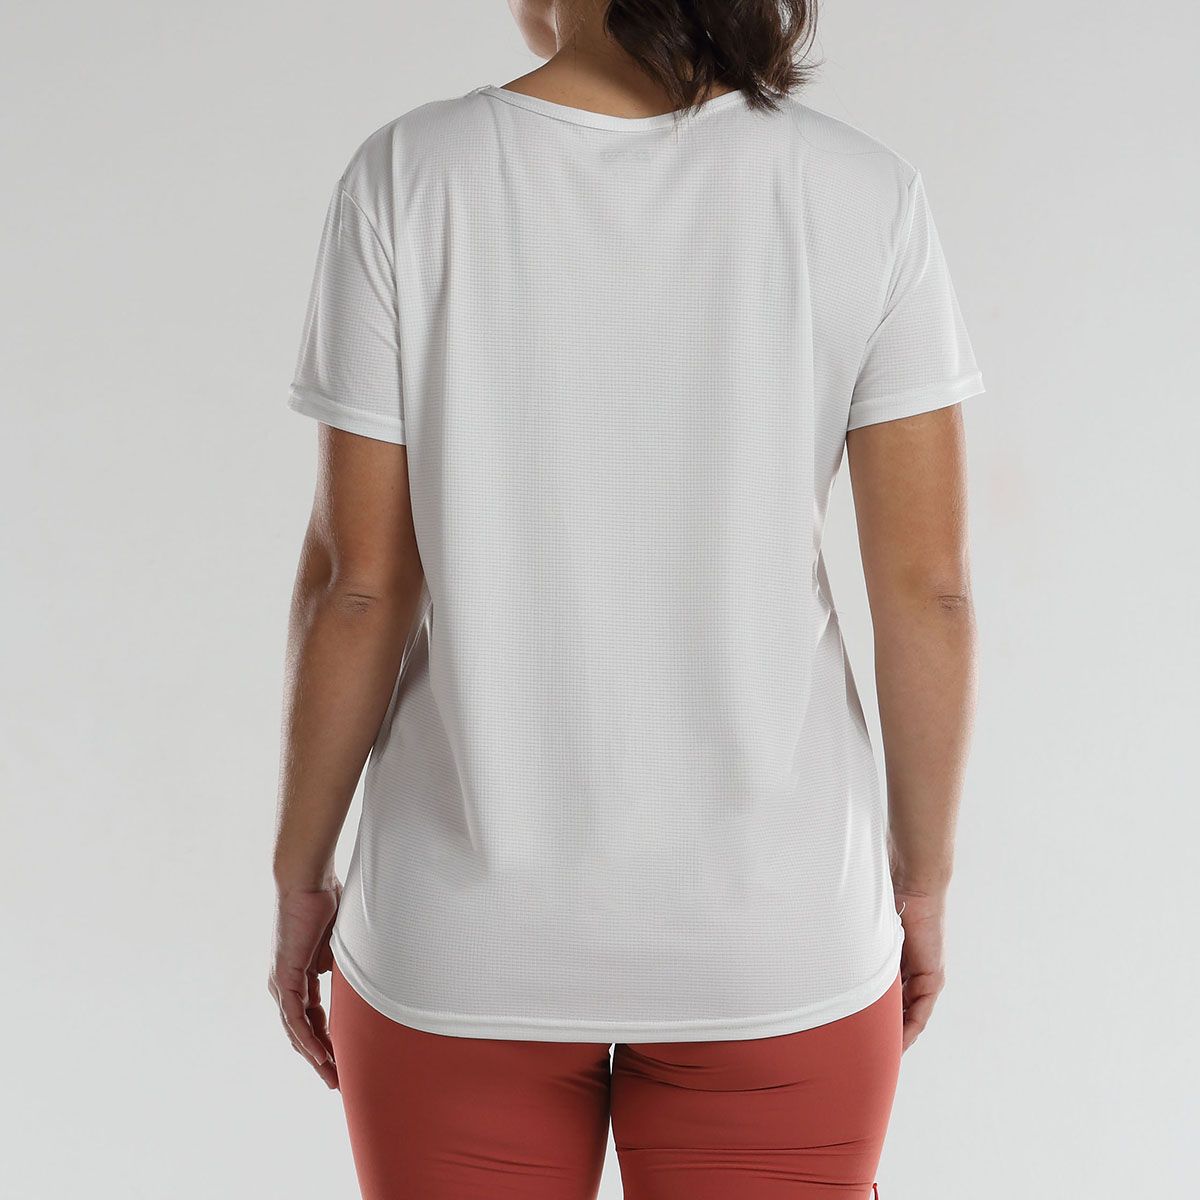 Camiseta mujer +8000 NECHYS (3 COLORES)